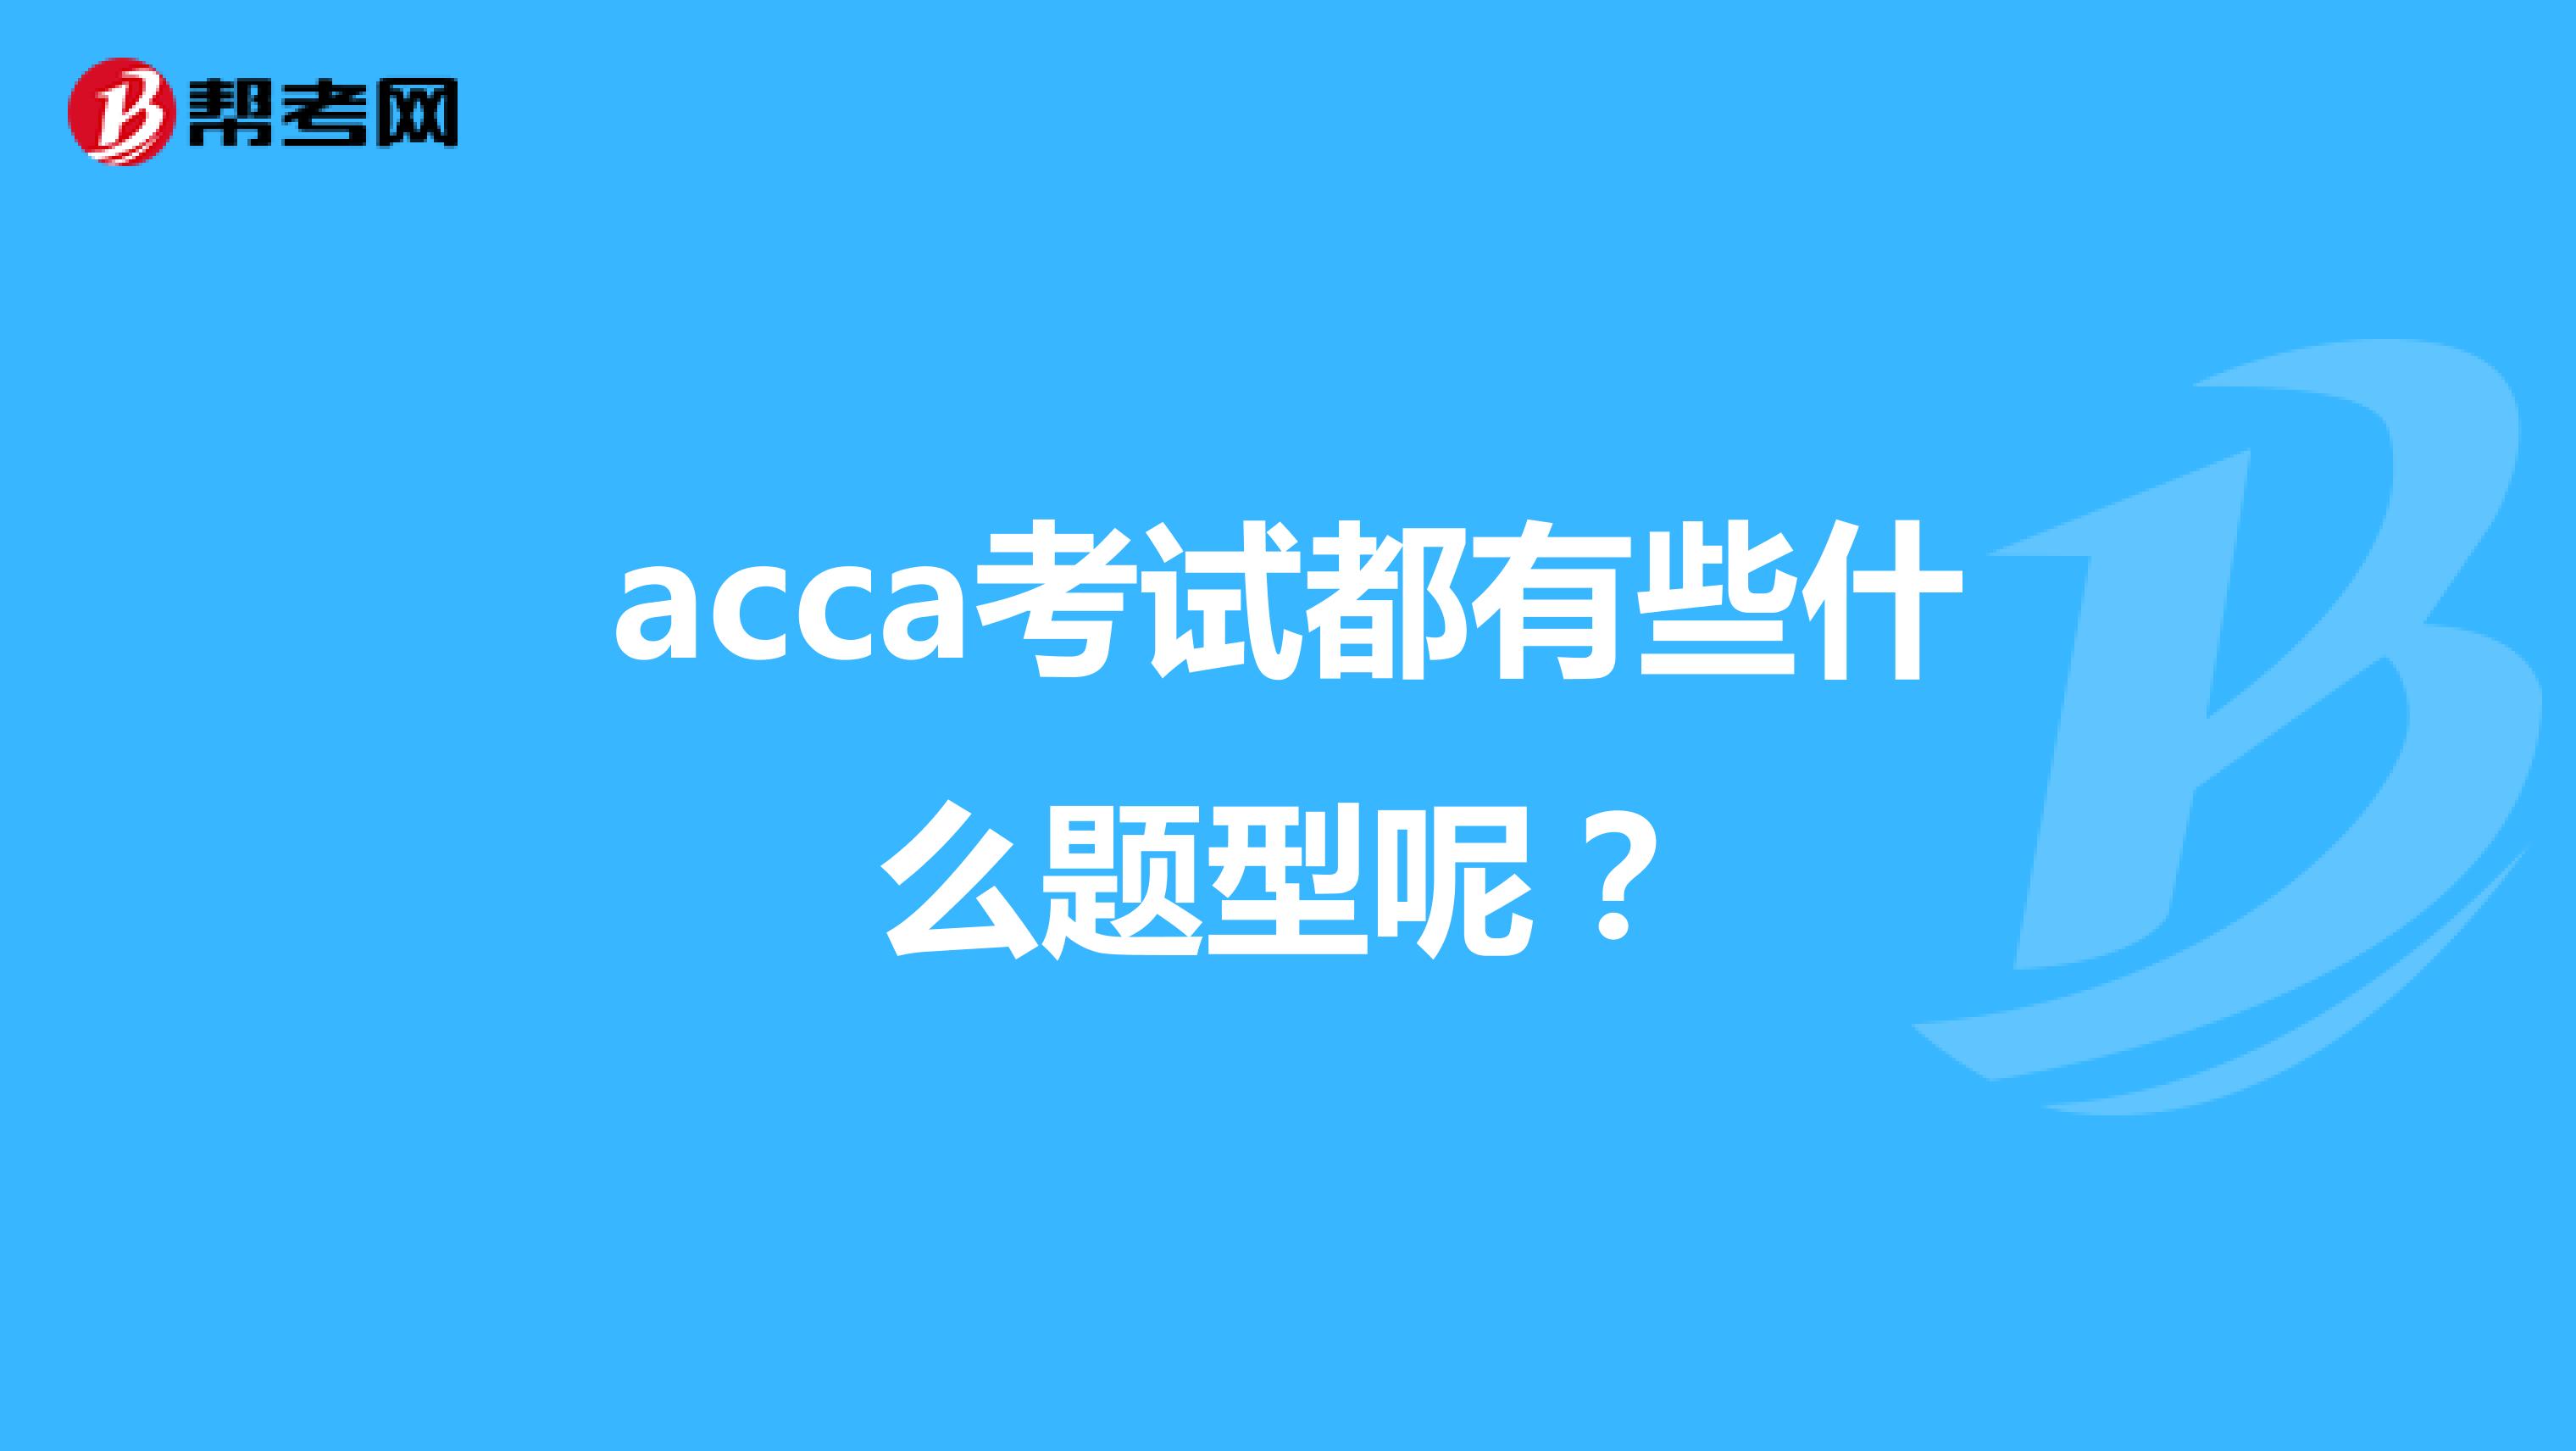 acca考试都有些什么题型呢？